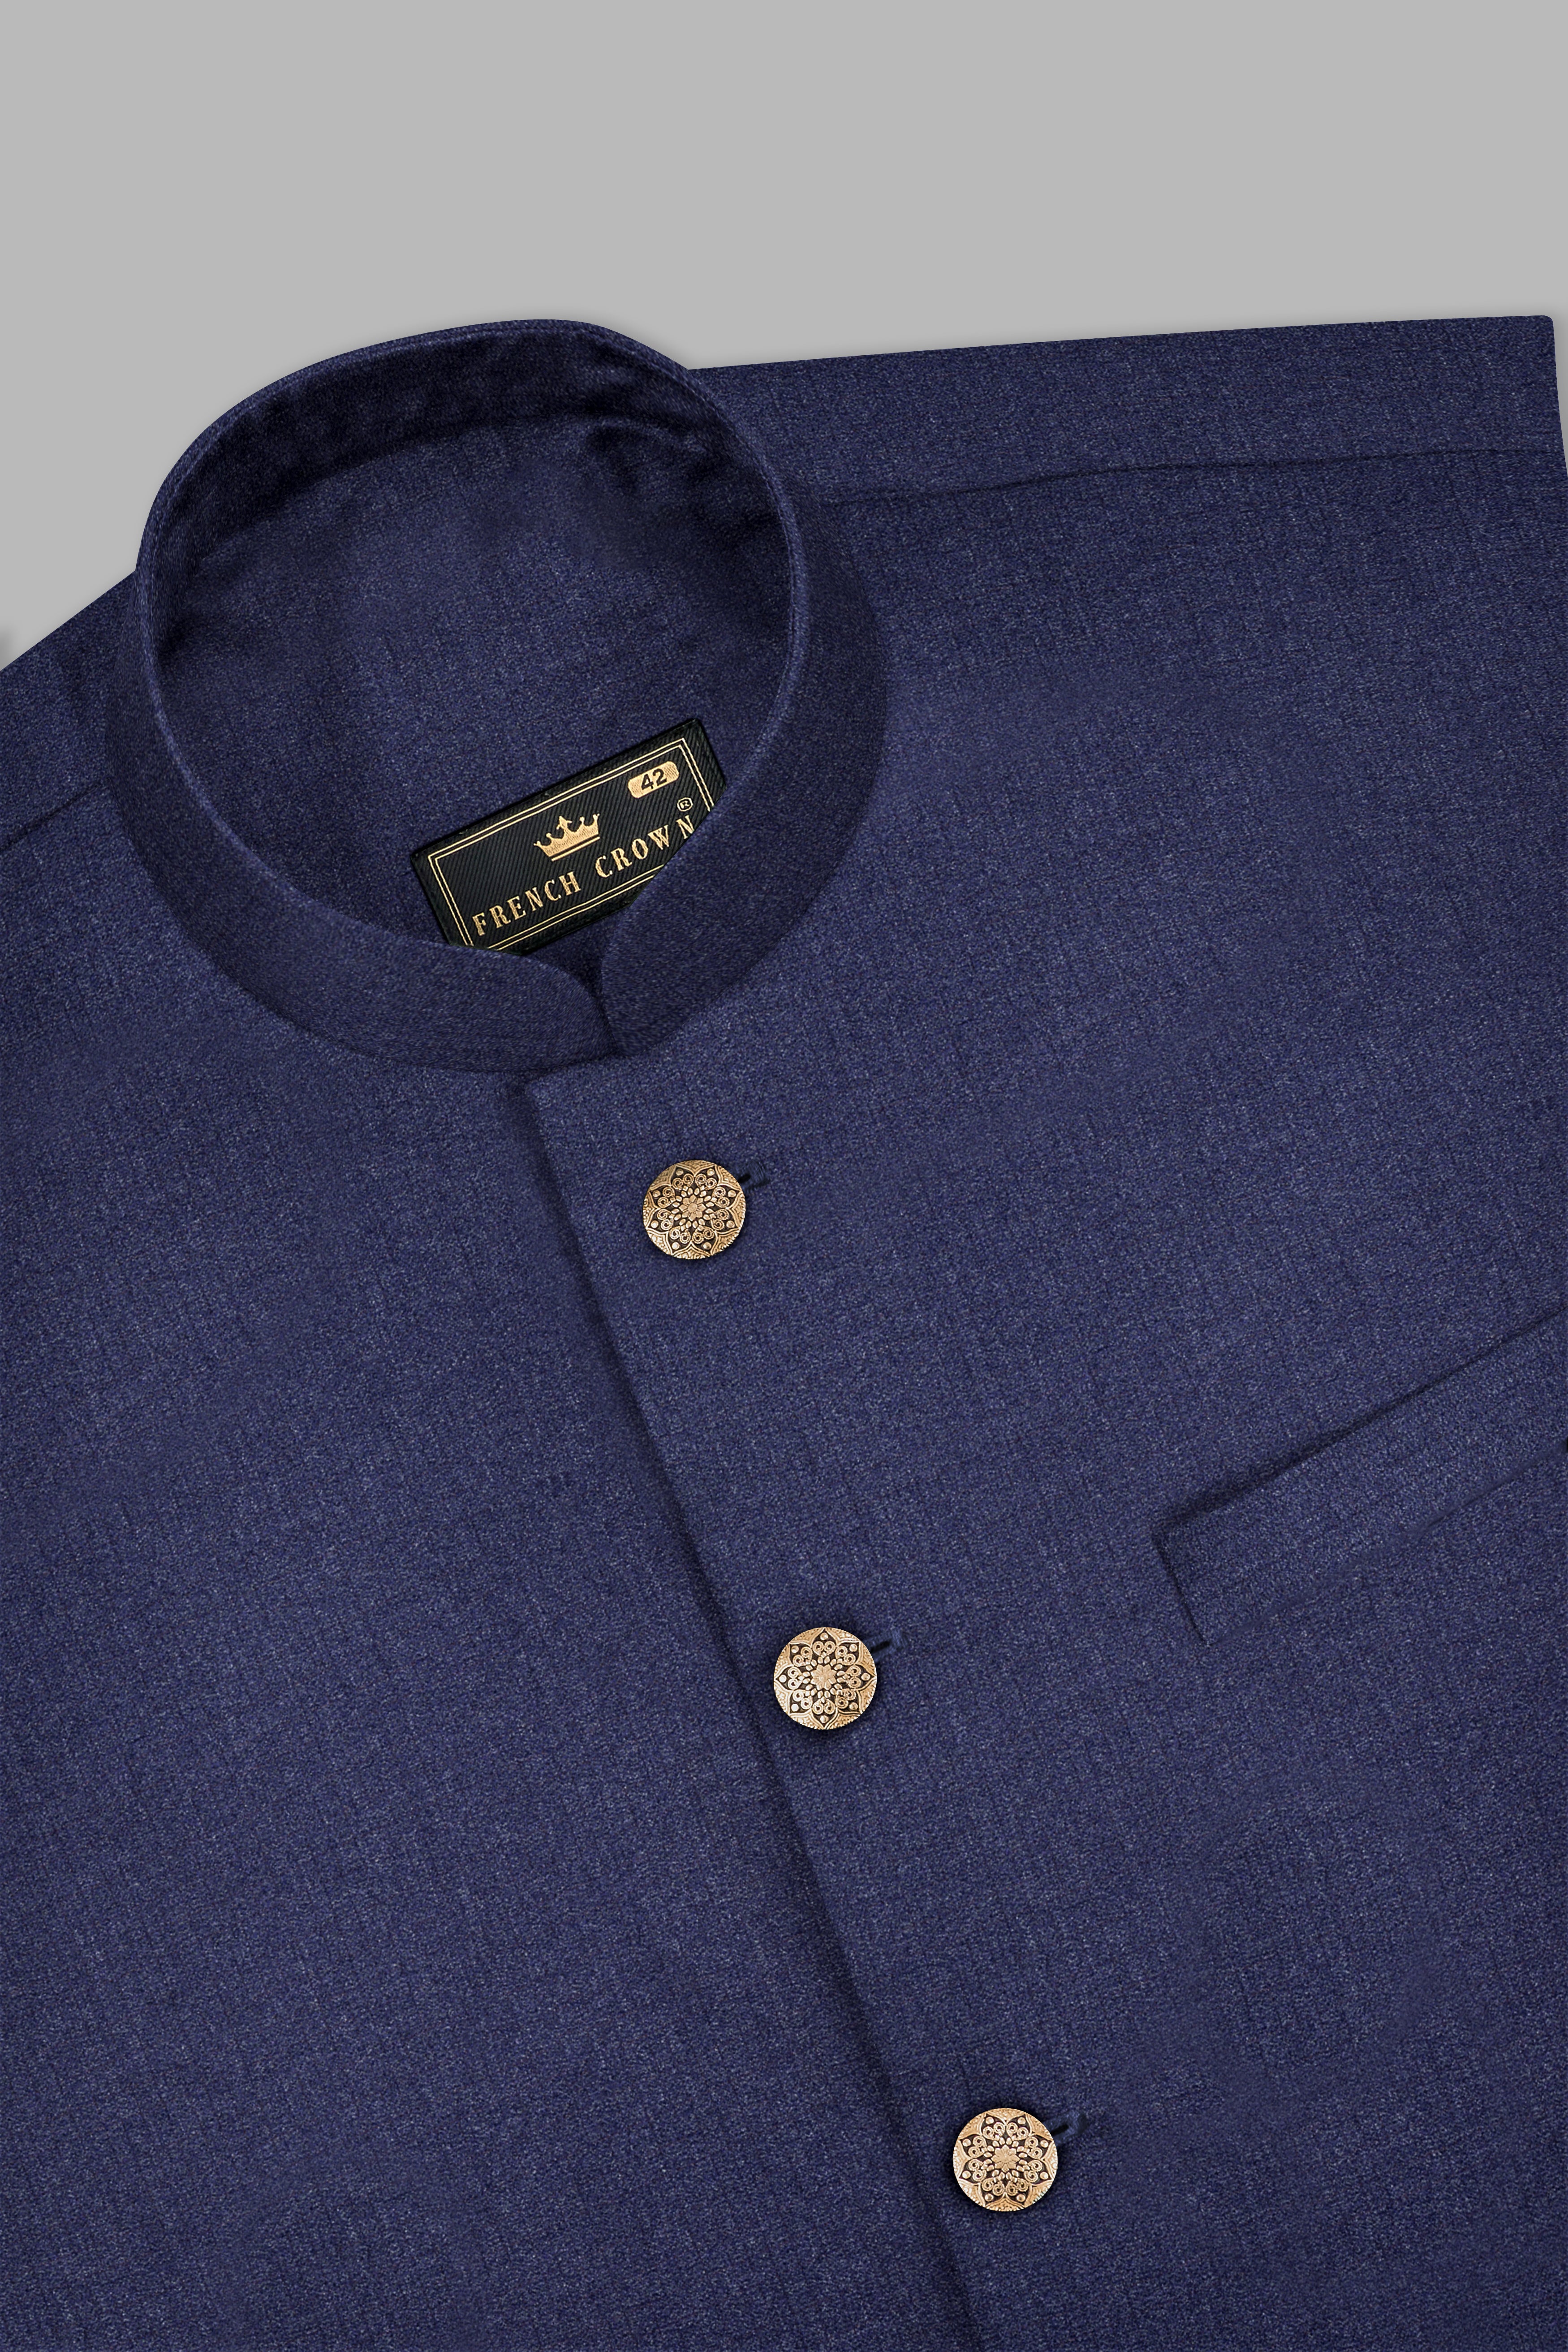 Ebony Clay Blue Textured Wool Blend Nehru Jacket